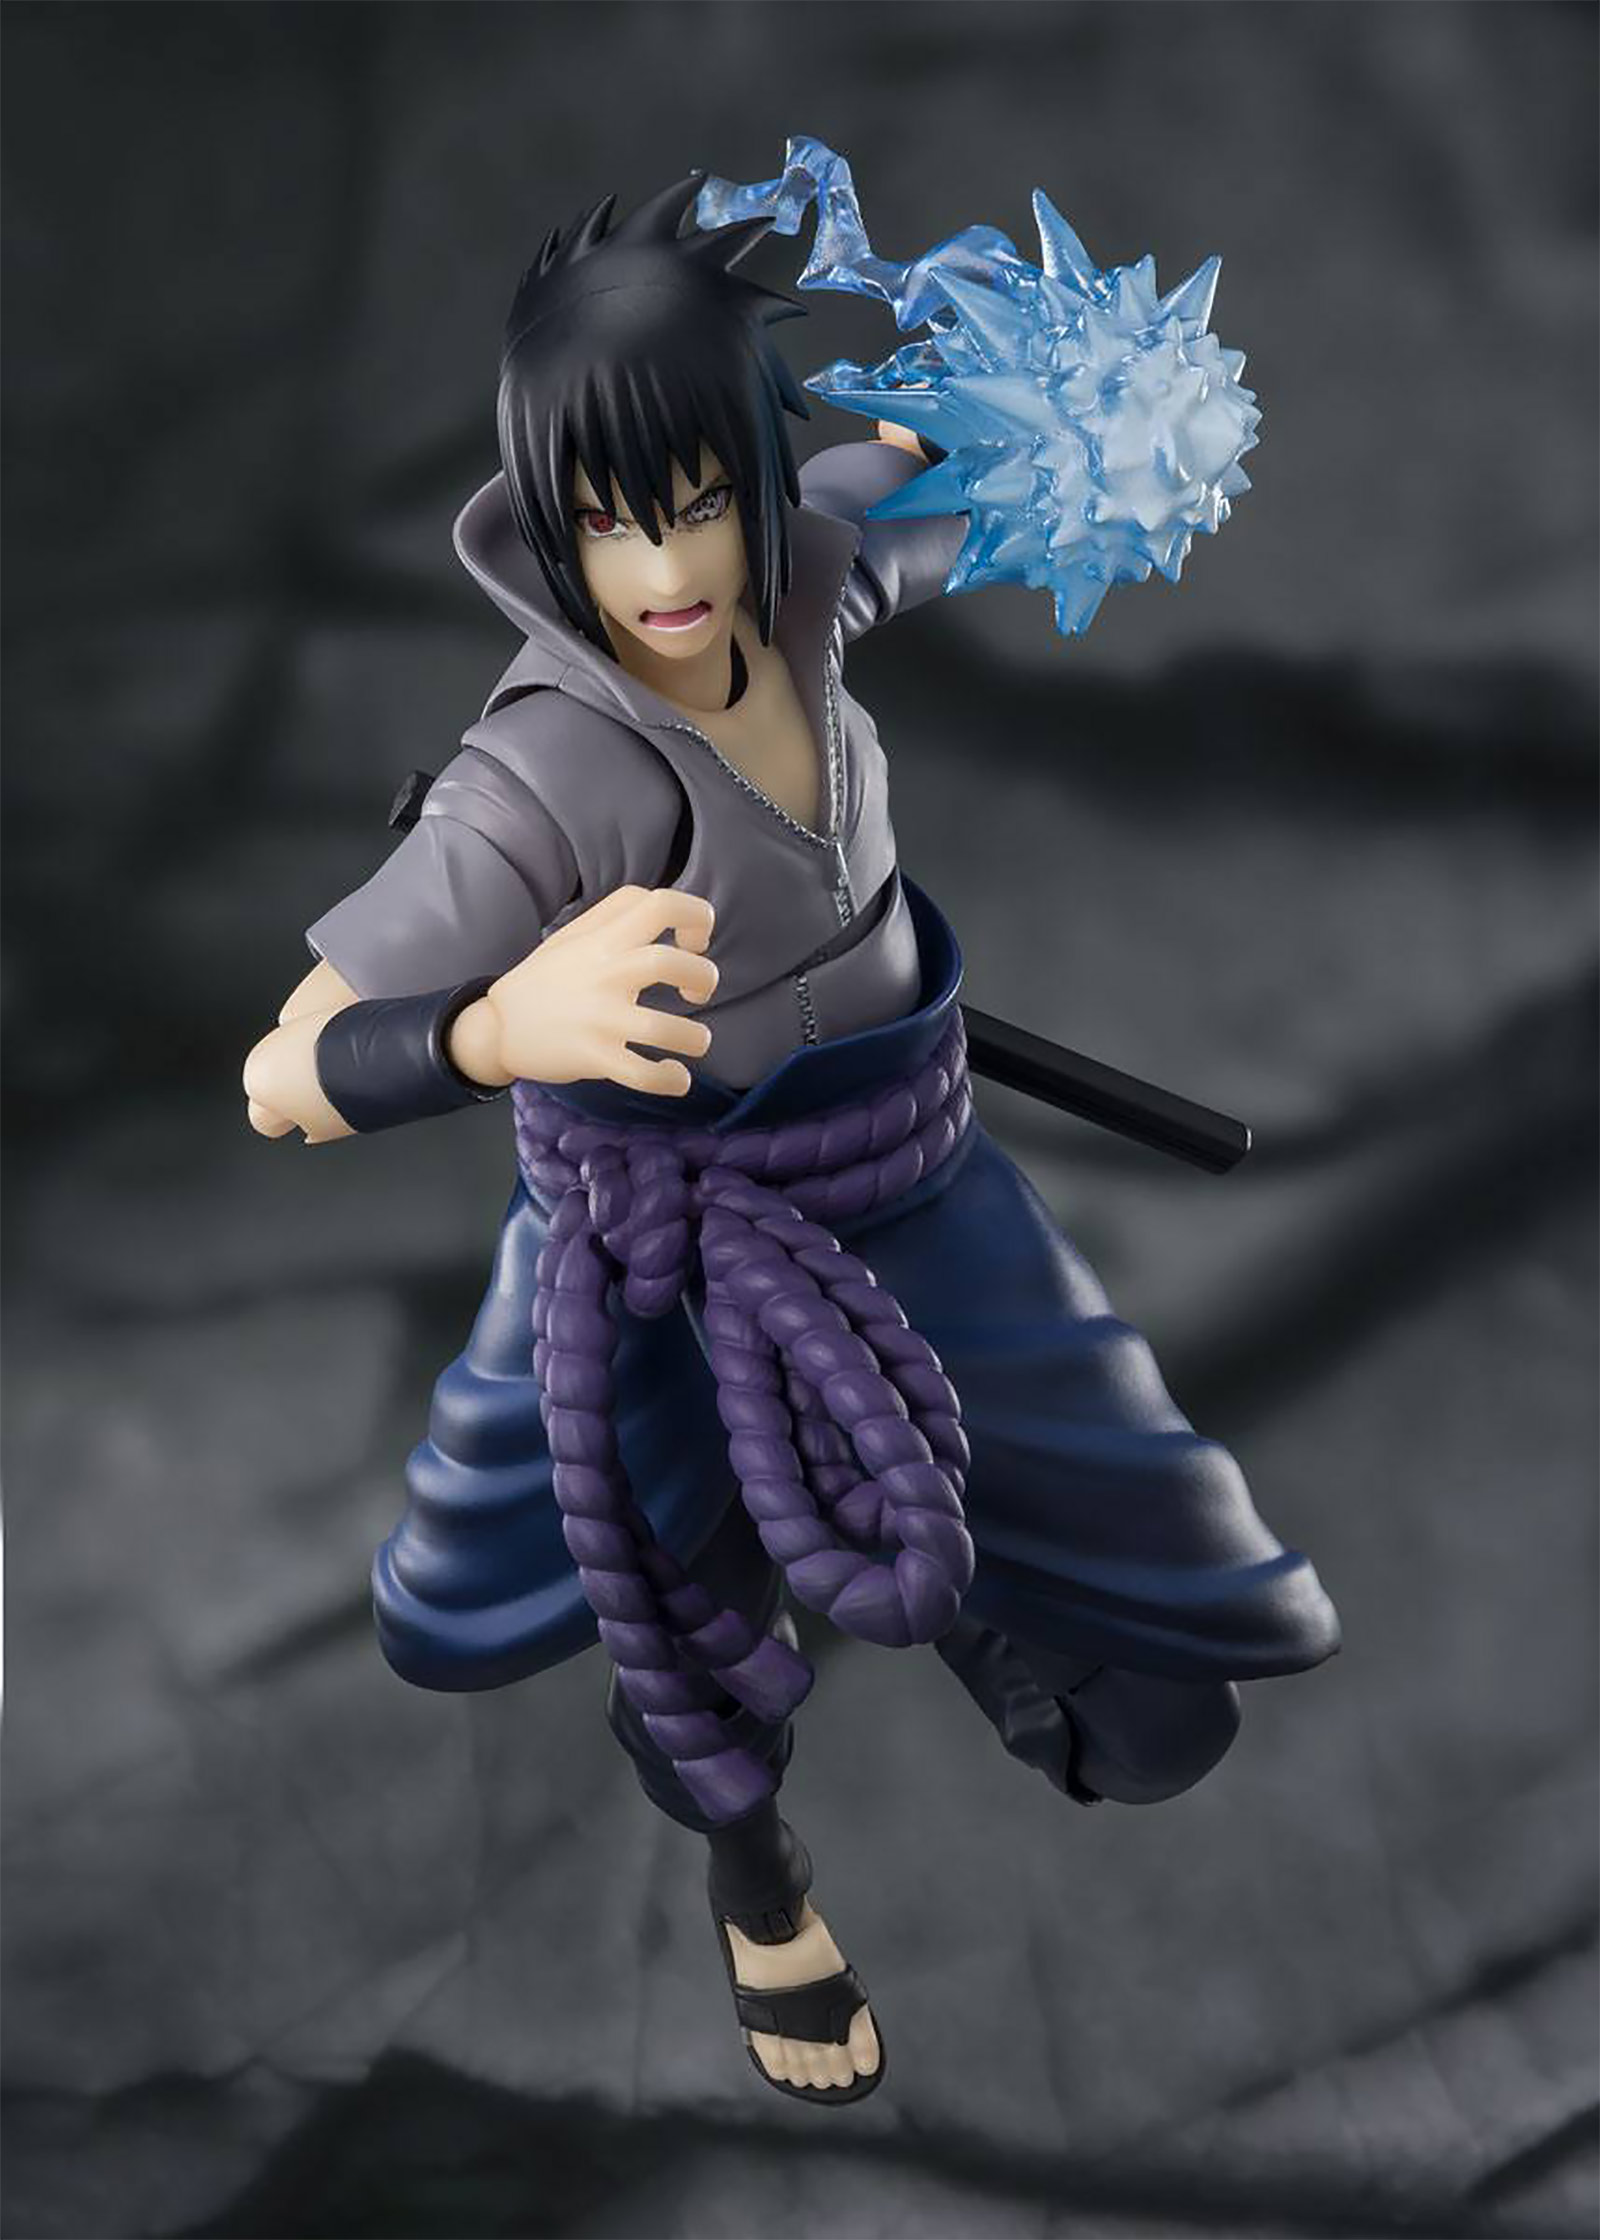 Naruto Shippuden - Sasuke Uchiha He Who Bears All Hatred Action Figure